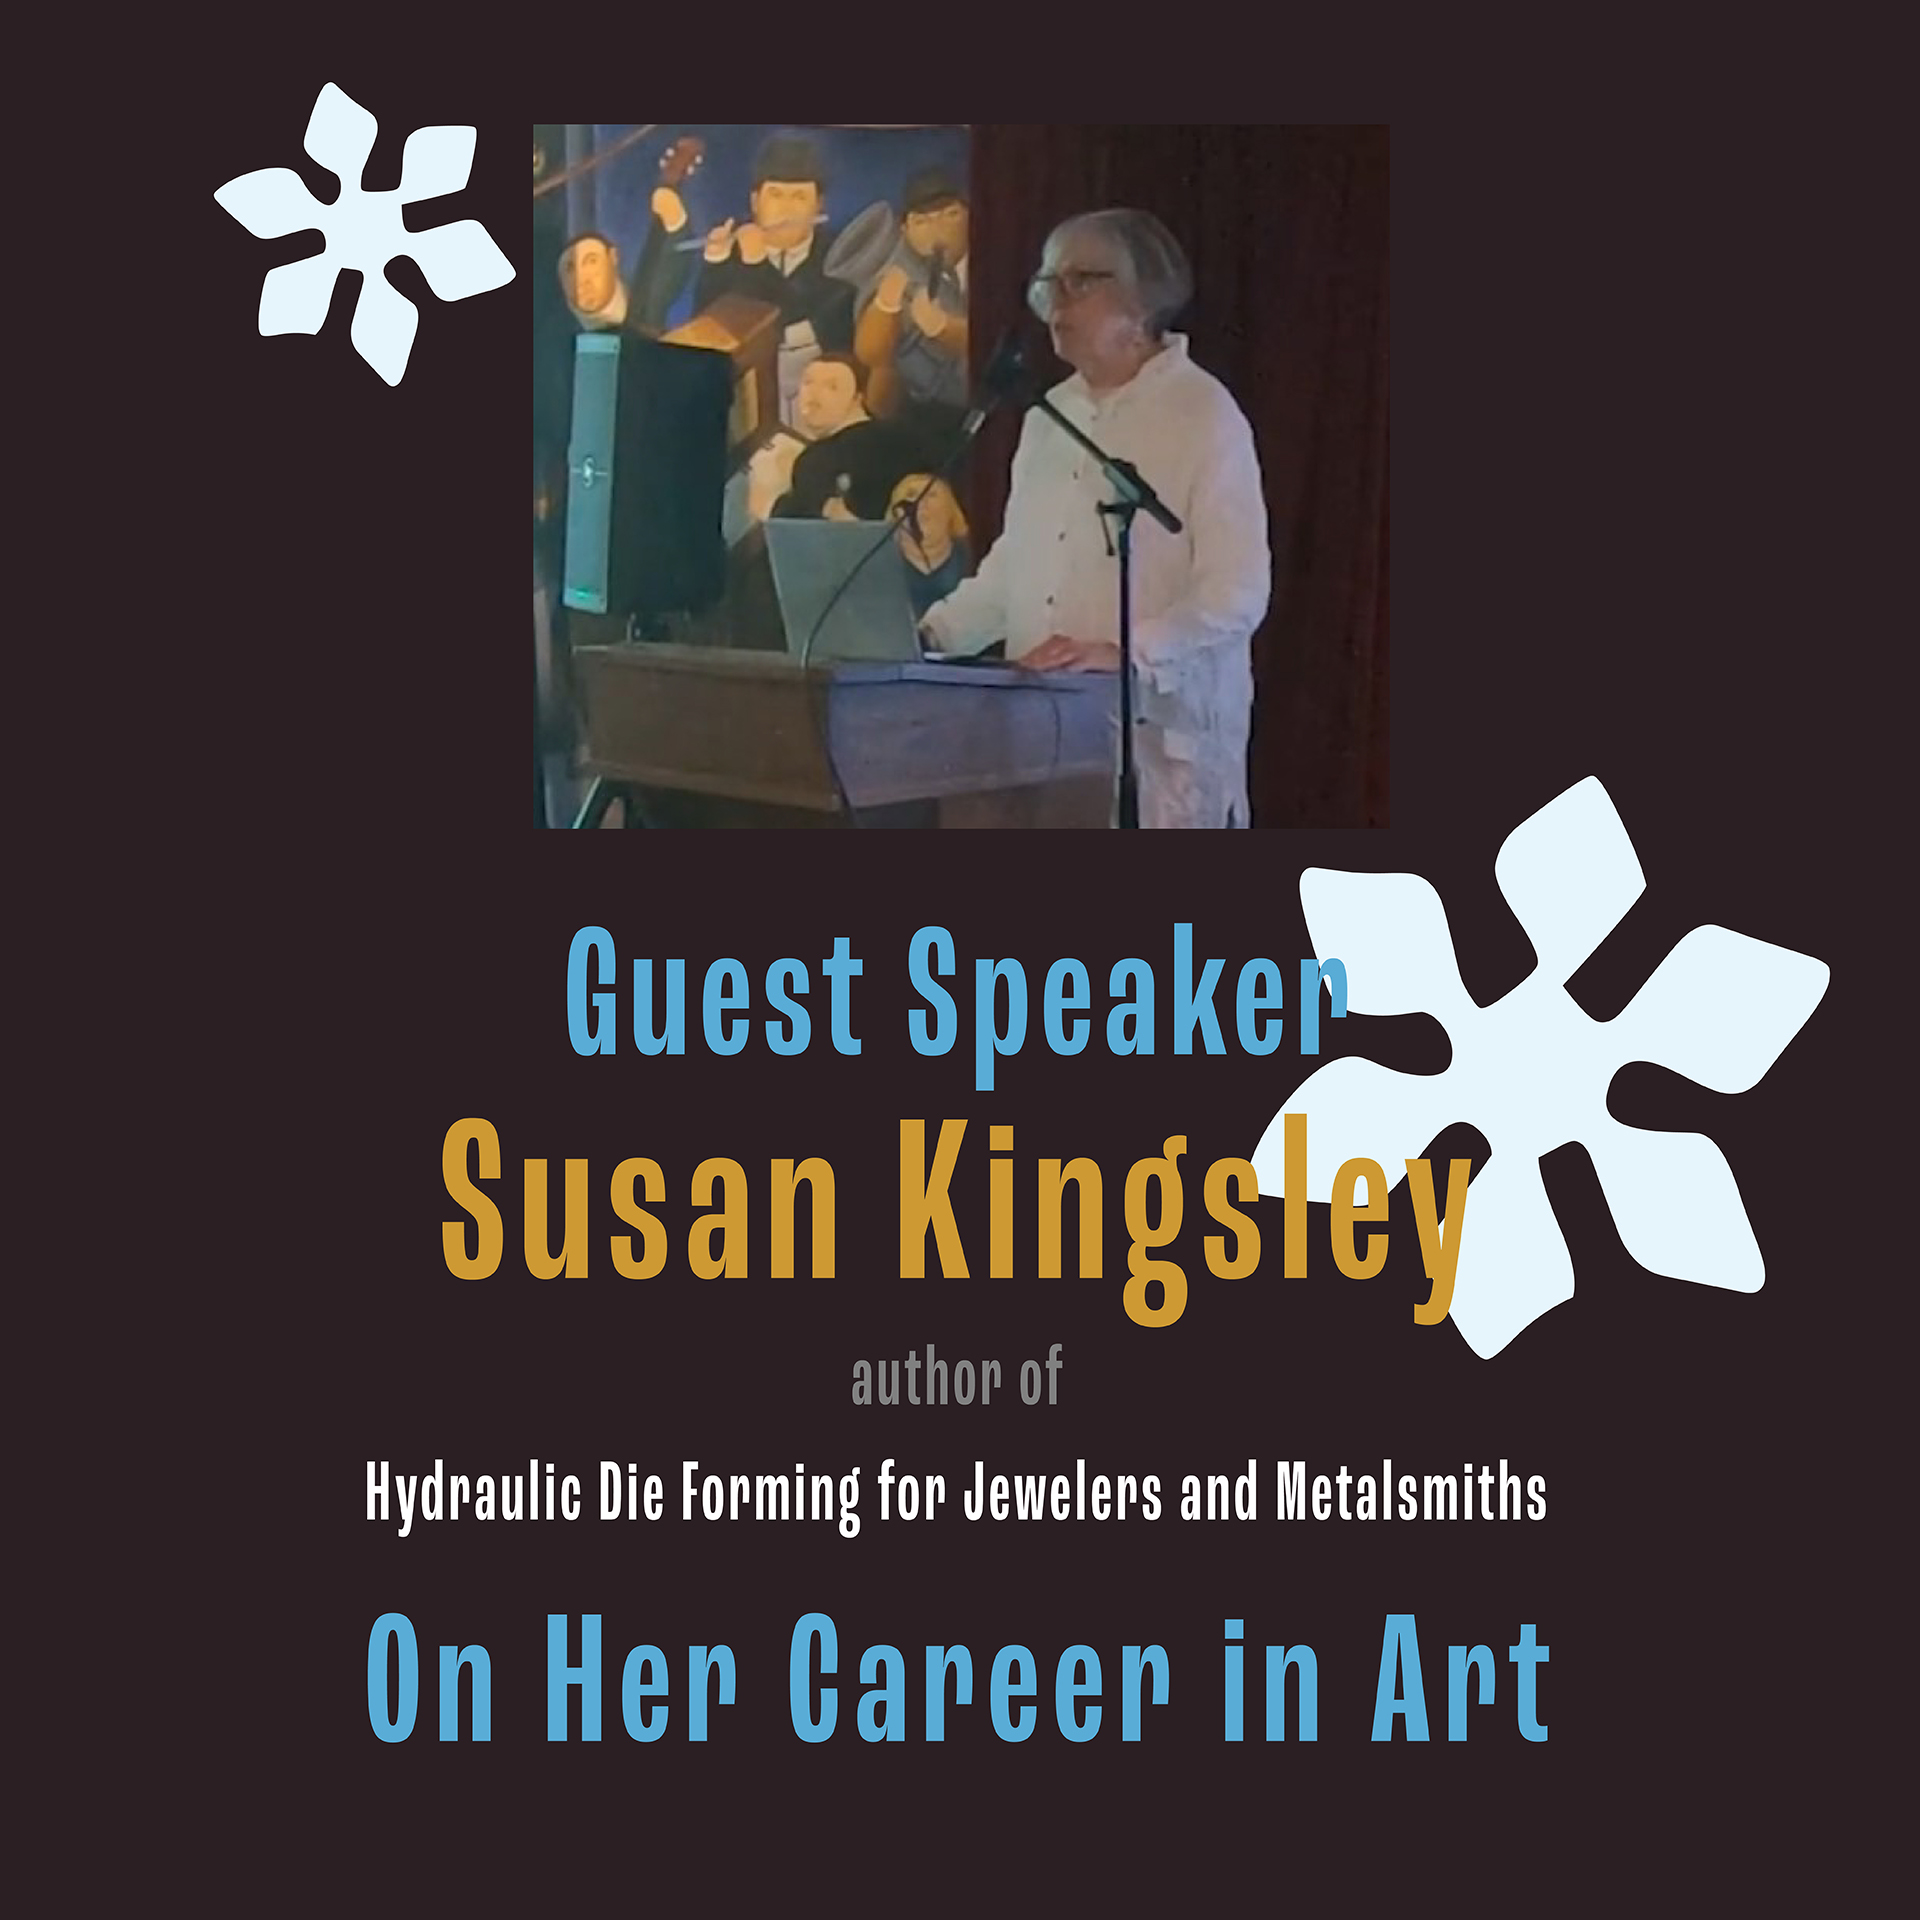 Guest Speaker Susan Kingsley